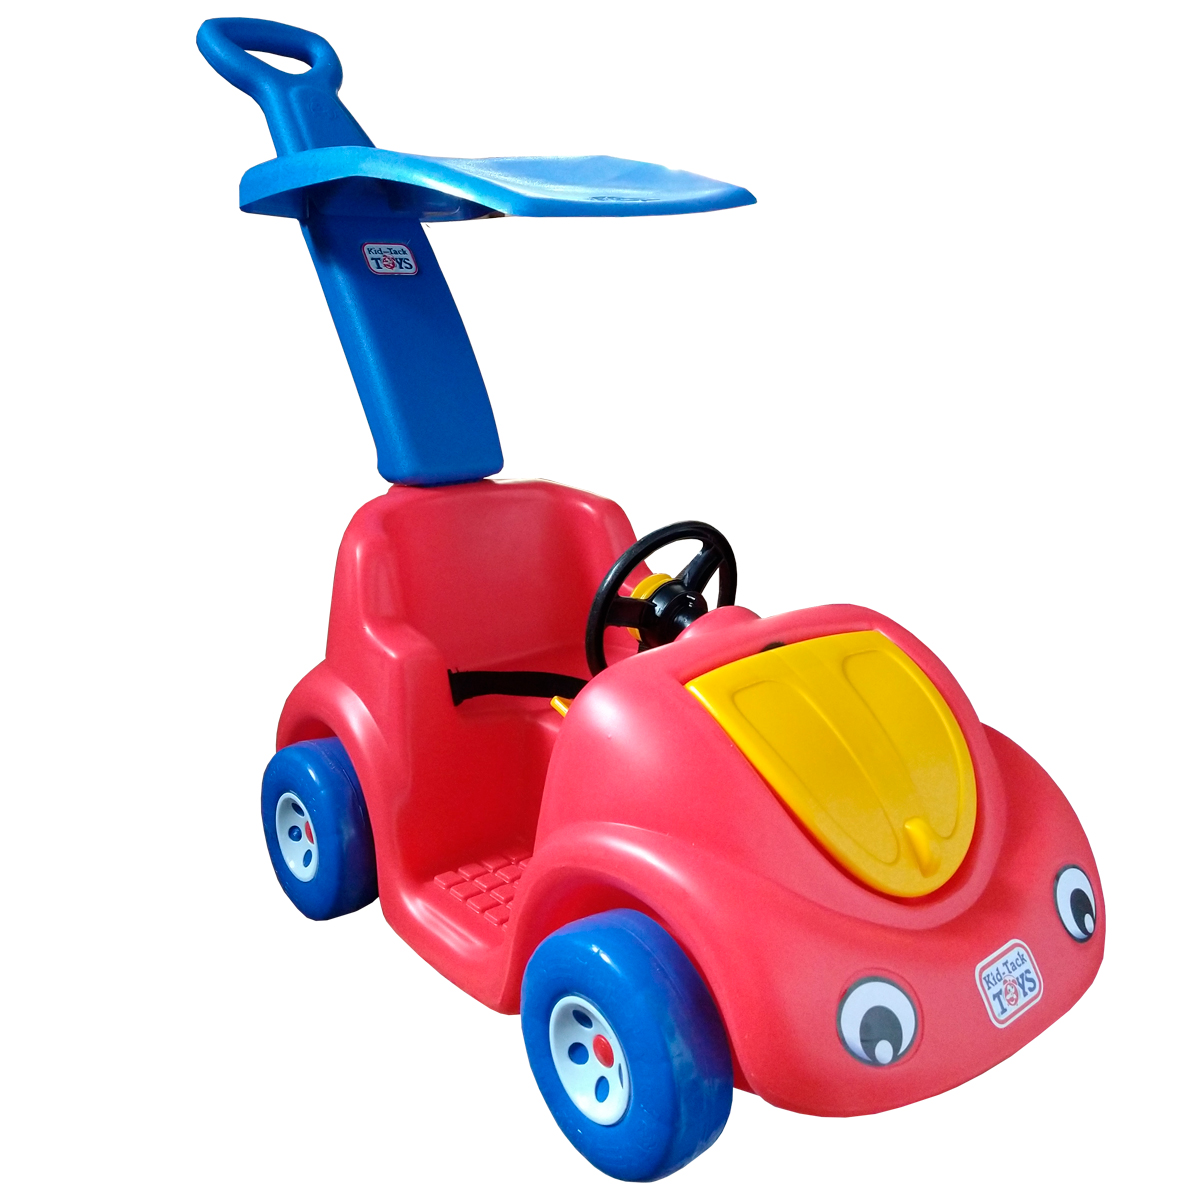 Juguete Carrito Montable Mytoy 705810rs Color Rojo Mini Car Buggy Con Techo